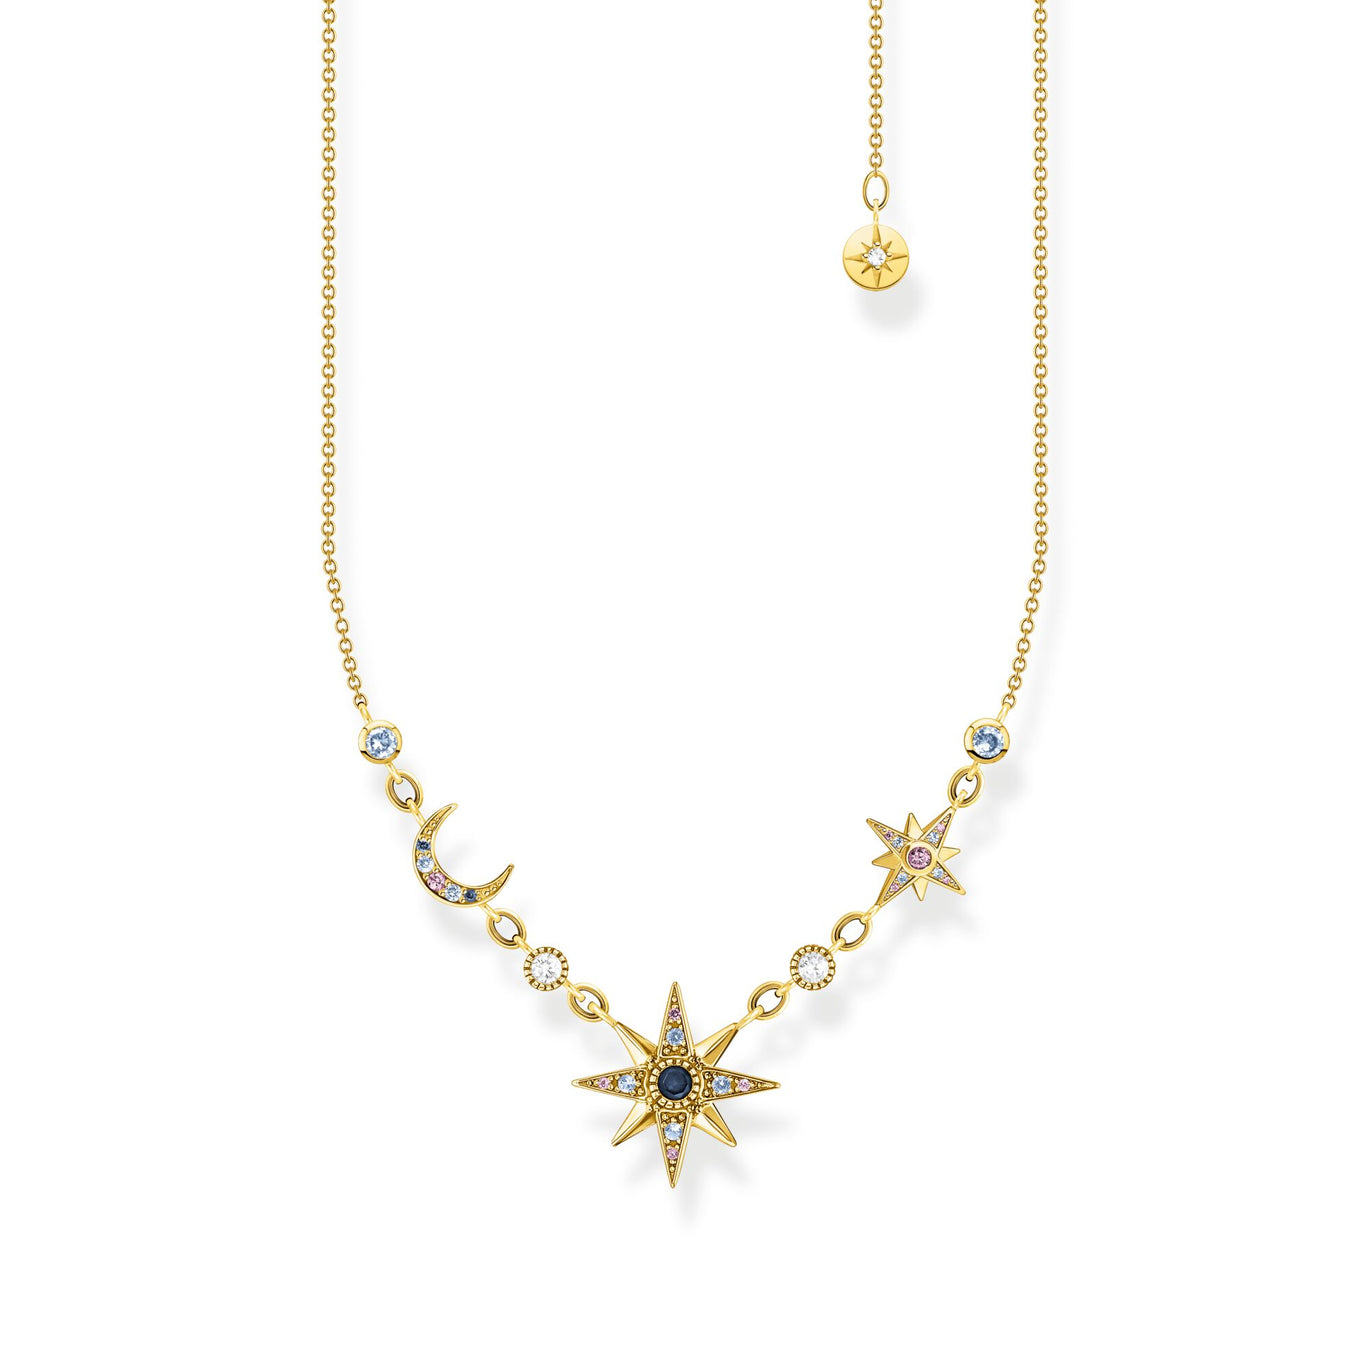 Thomas Sabo Royalty Star & Moon Necklace Yellow Gold